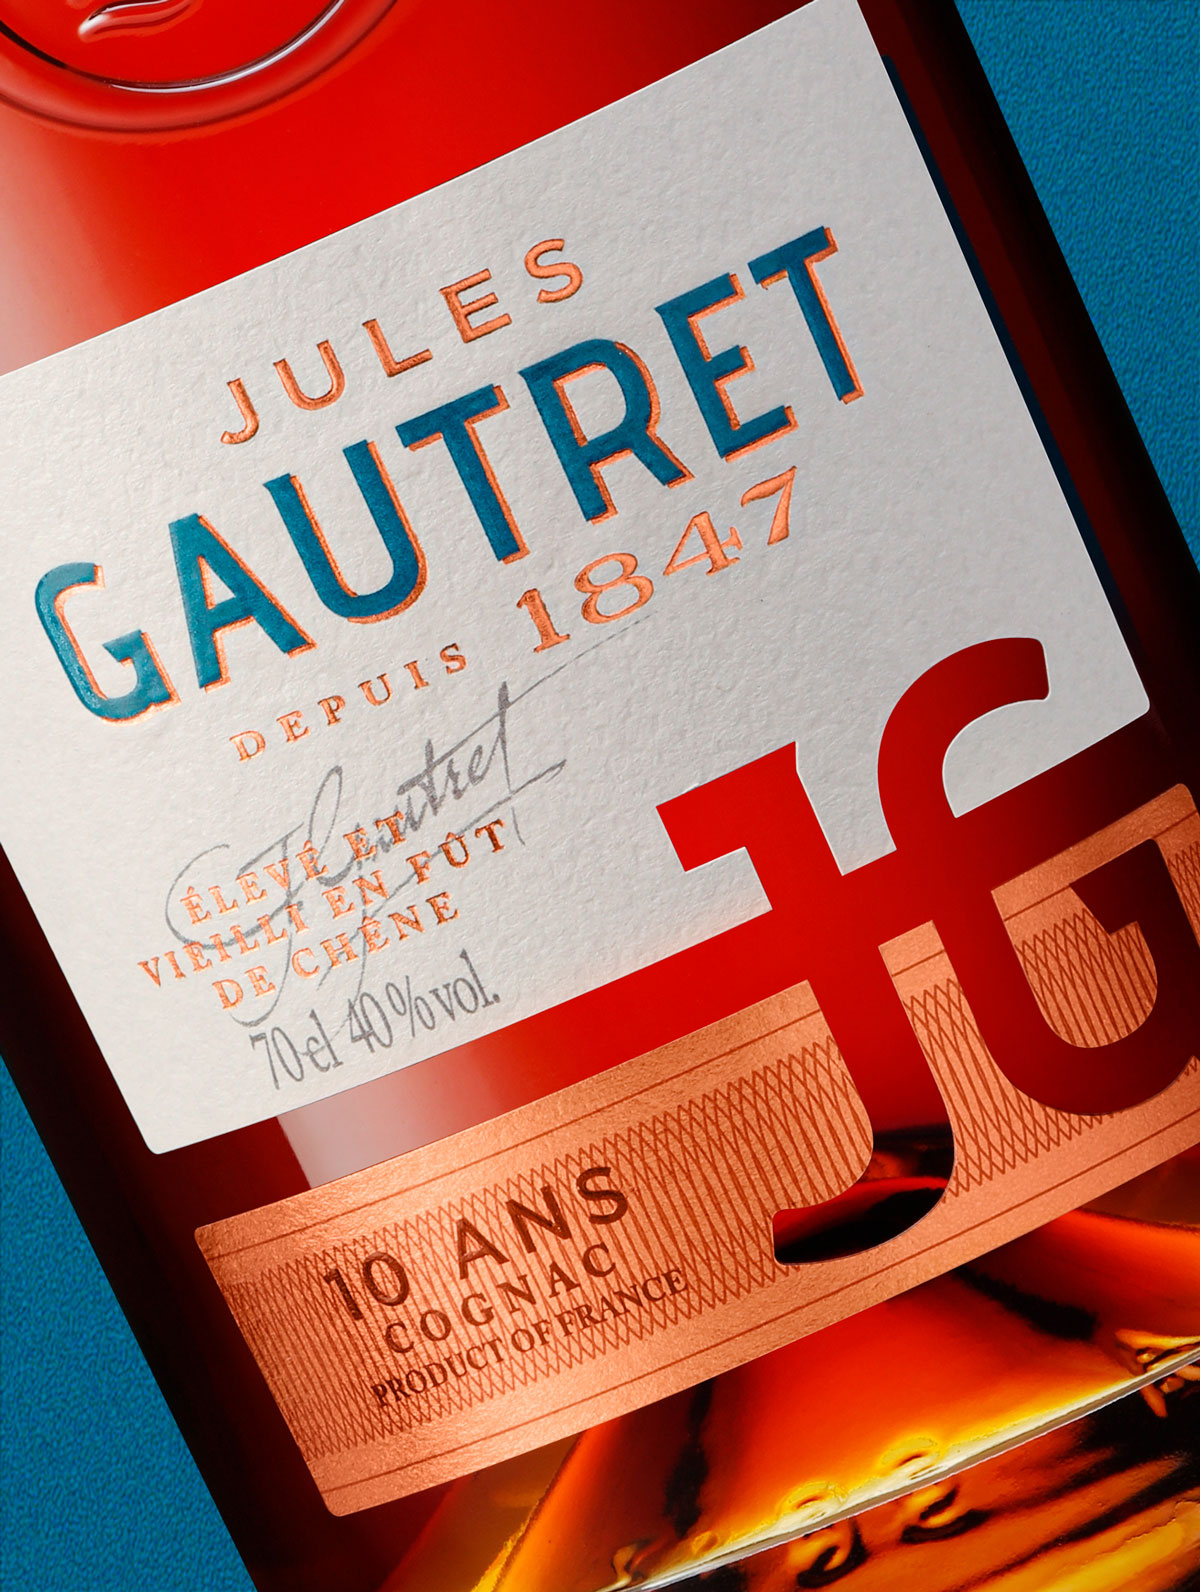 - Society Gautret Brand Linea Design Cognac Maison Range Relift World Jules